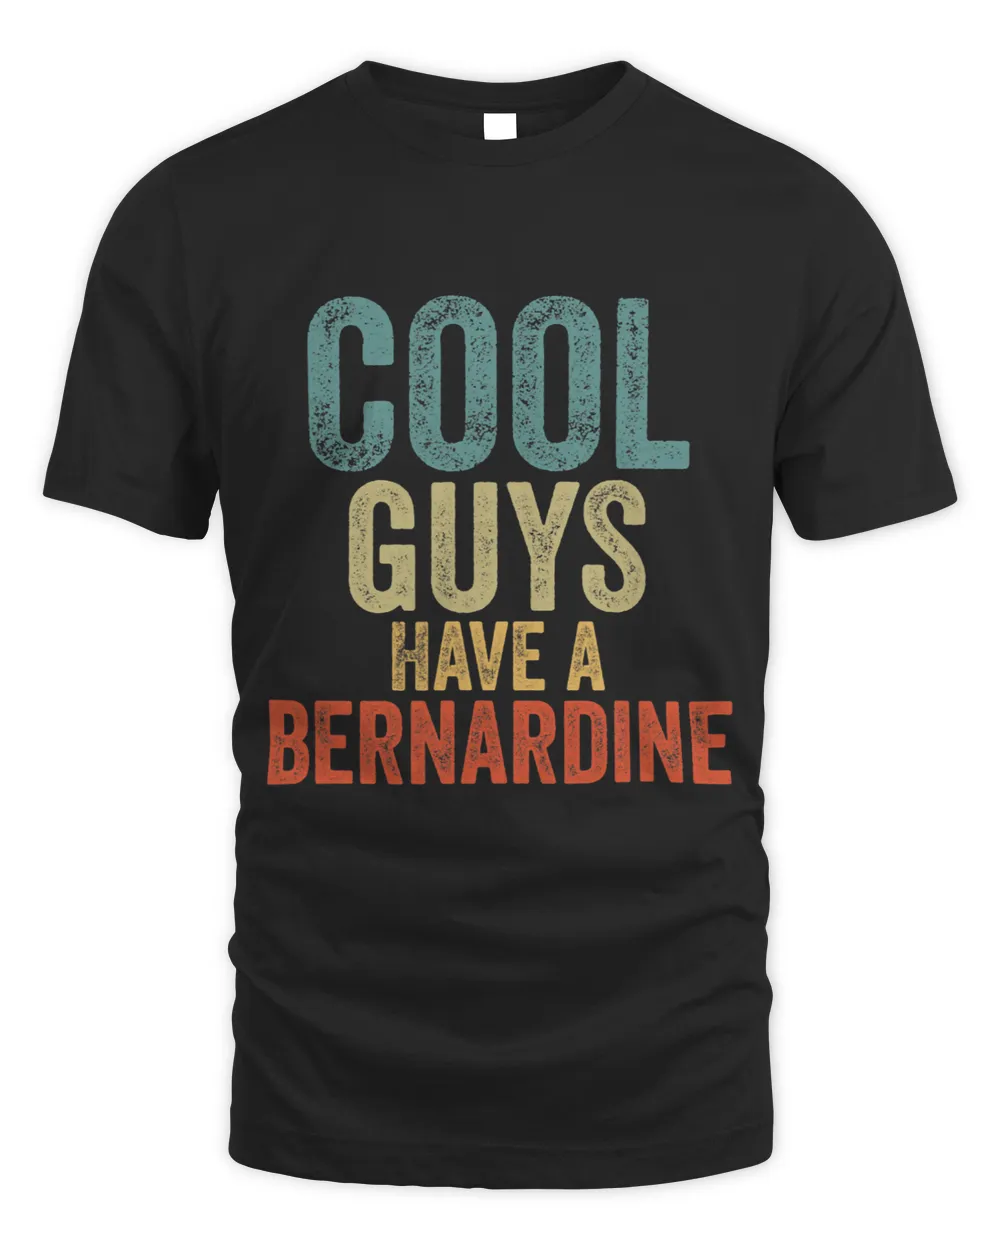 Cool Guys have a bernardine Saint Bernard dog dogs